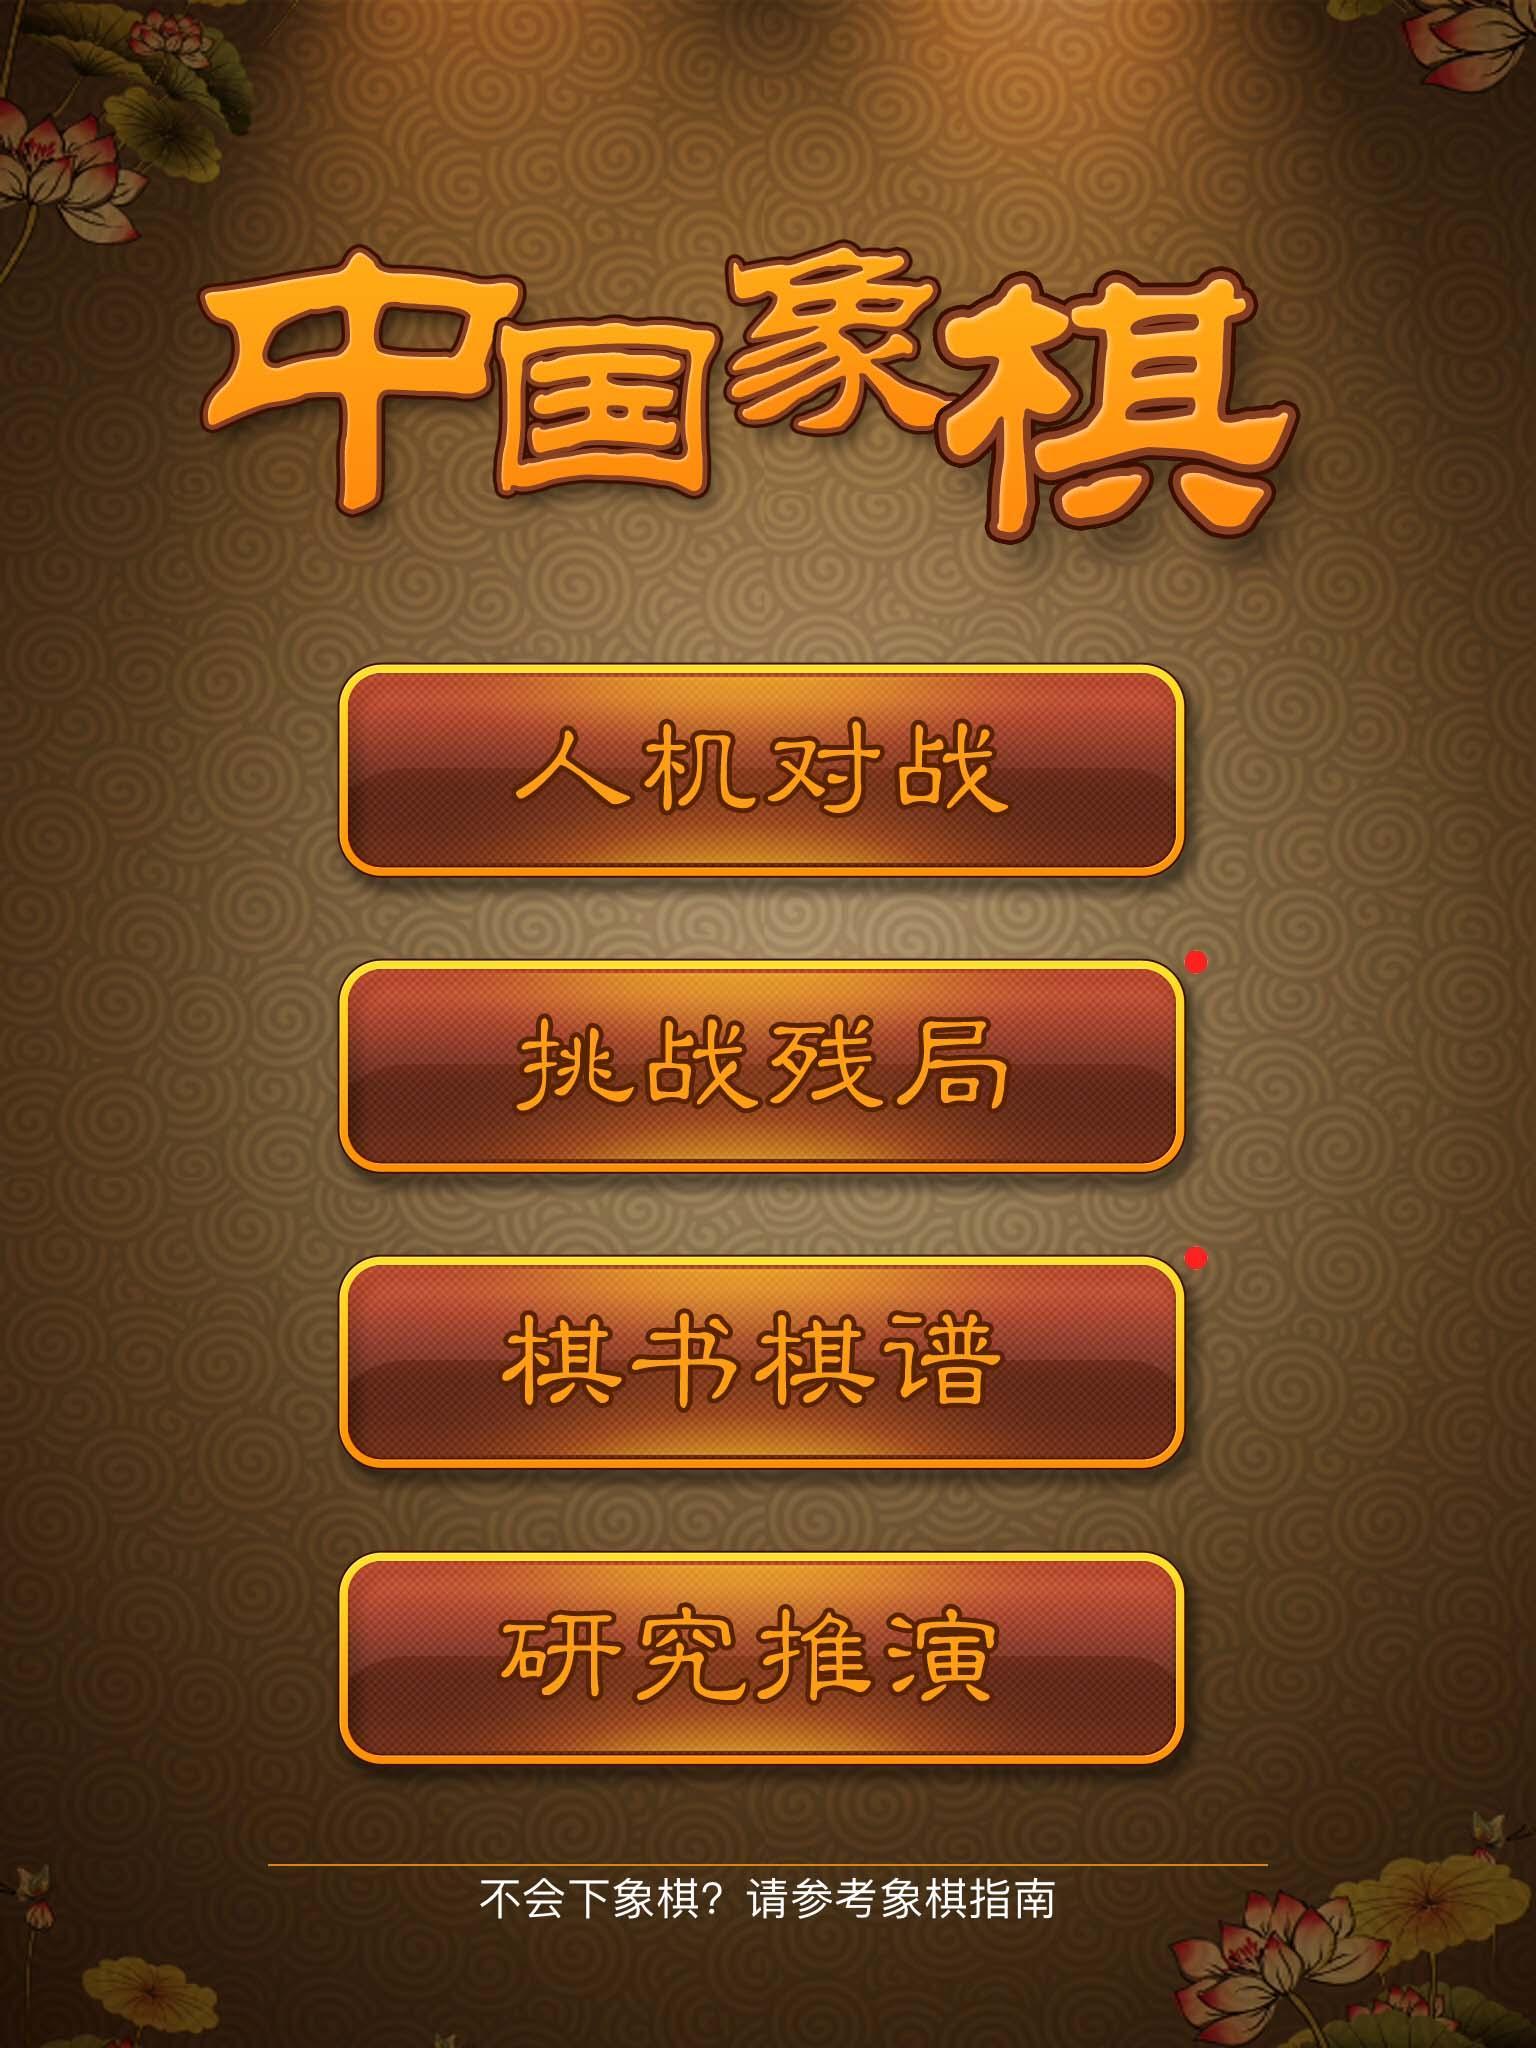 Chinese Chess, Xiangqi - many endgame and replay 3.9.6 Screenshot 12